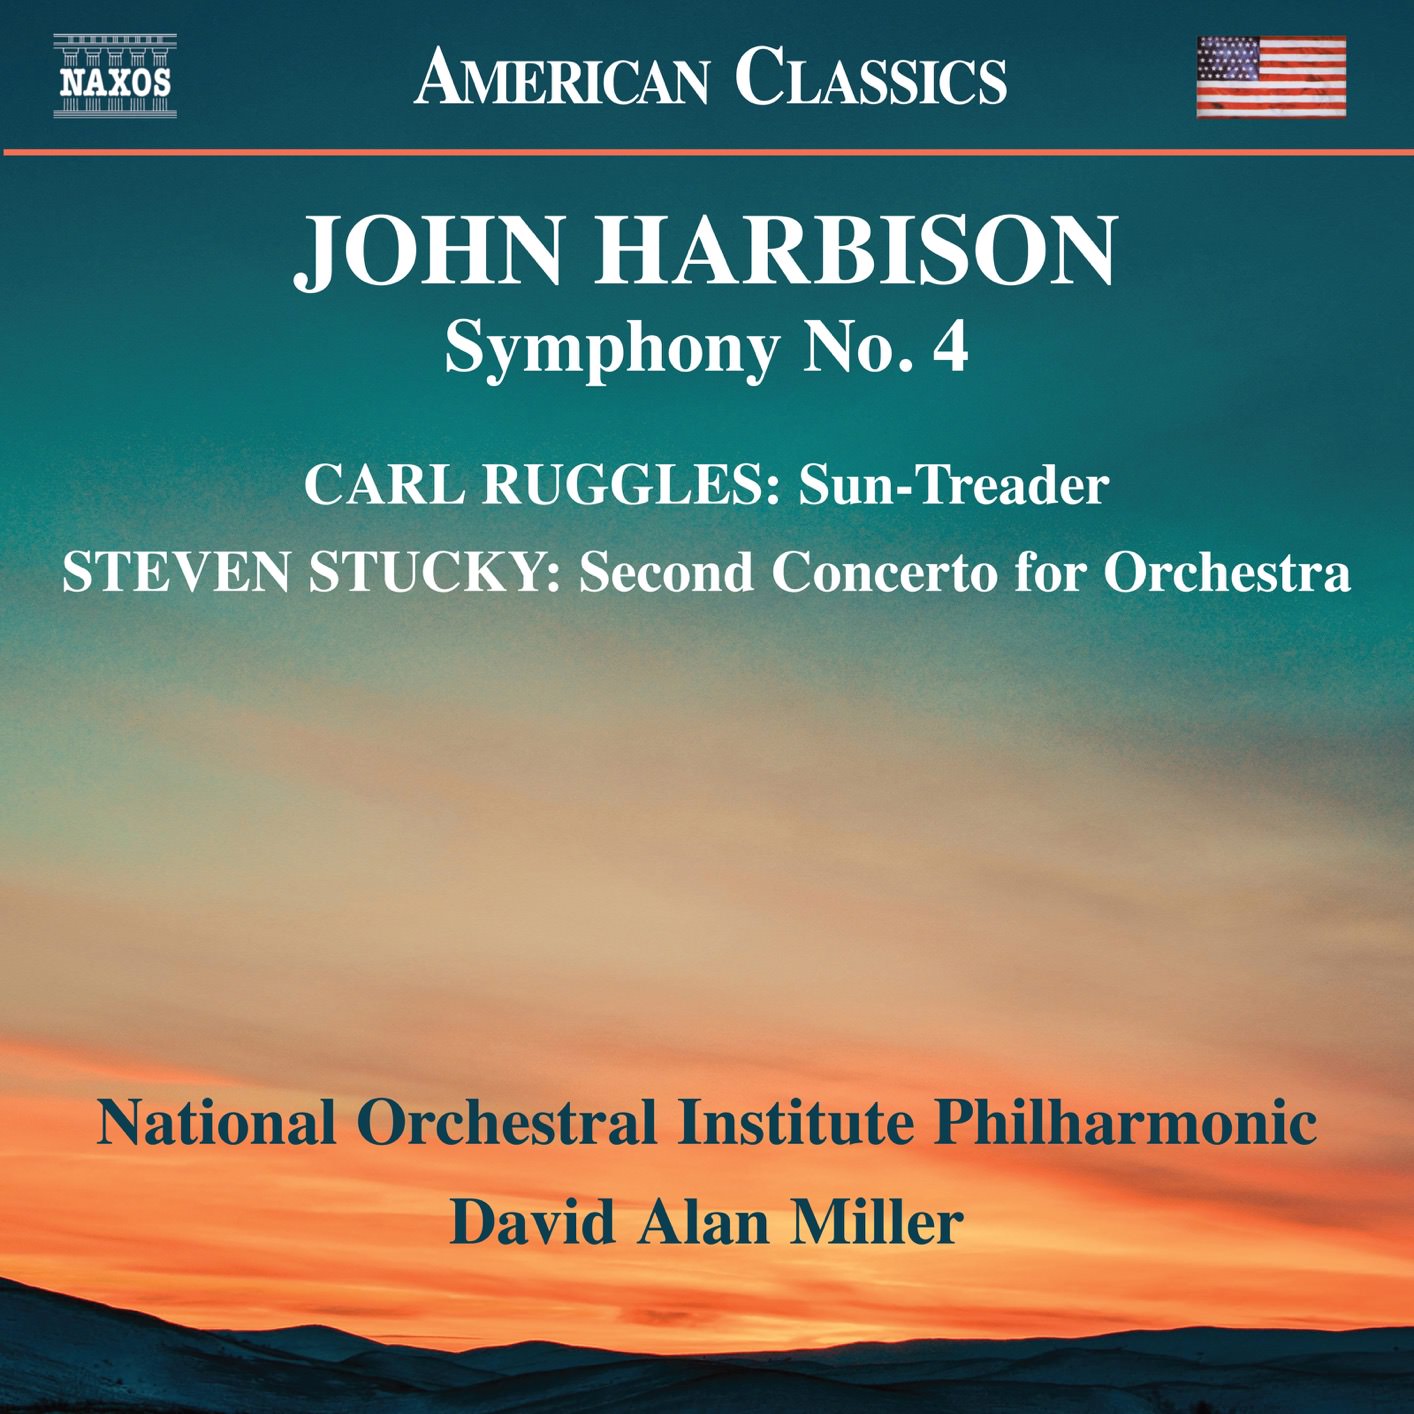 National Orchestral Institute Philharmonic & David Alan Miller - Harbison, Ruggles & Stucky: Orchestral Works (2018) [FLAC 24bit/96kHz]